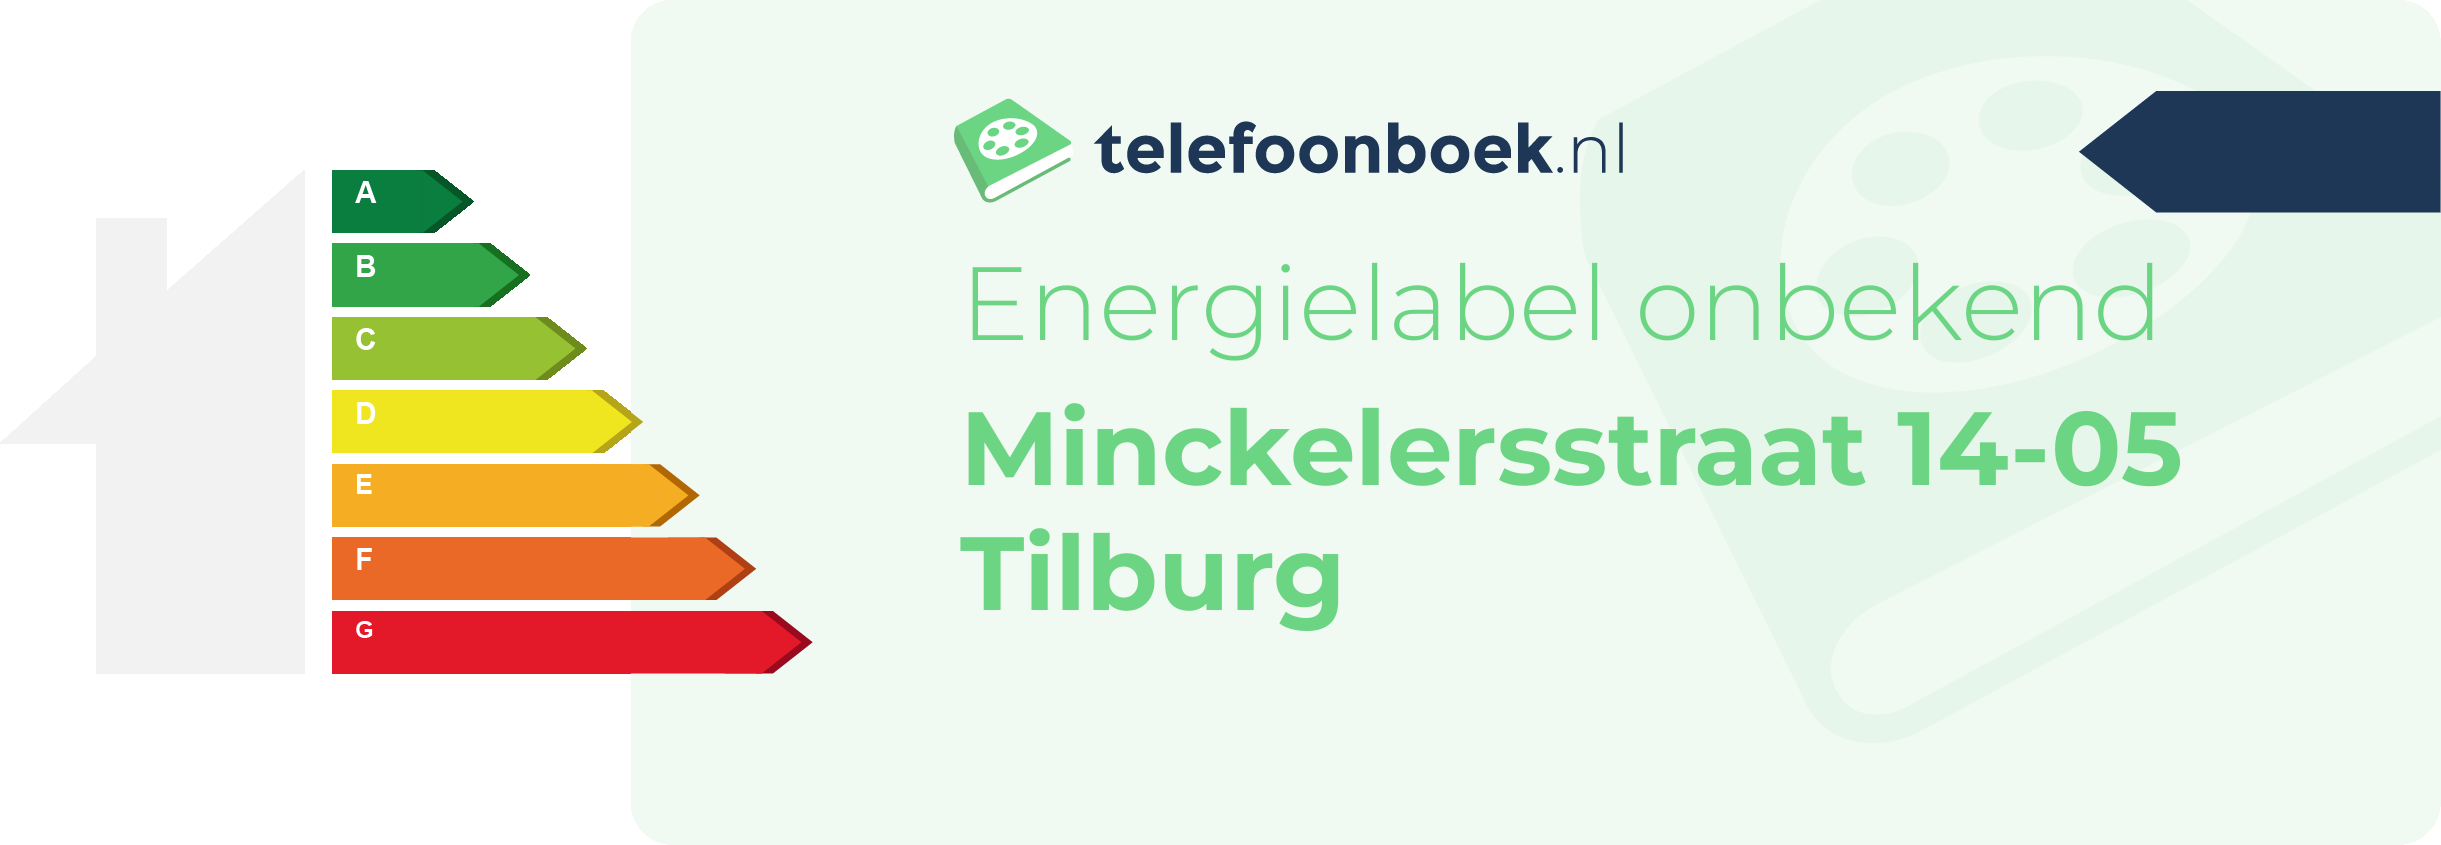 Energielabel Minckelersstraat 14-05 Tilburg